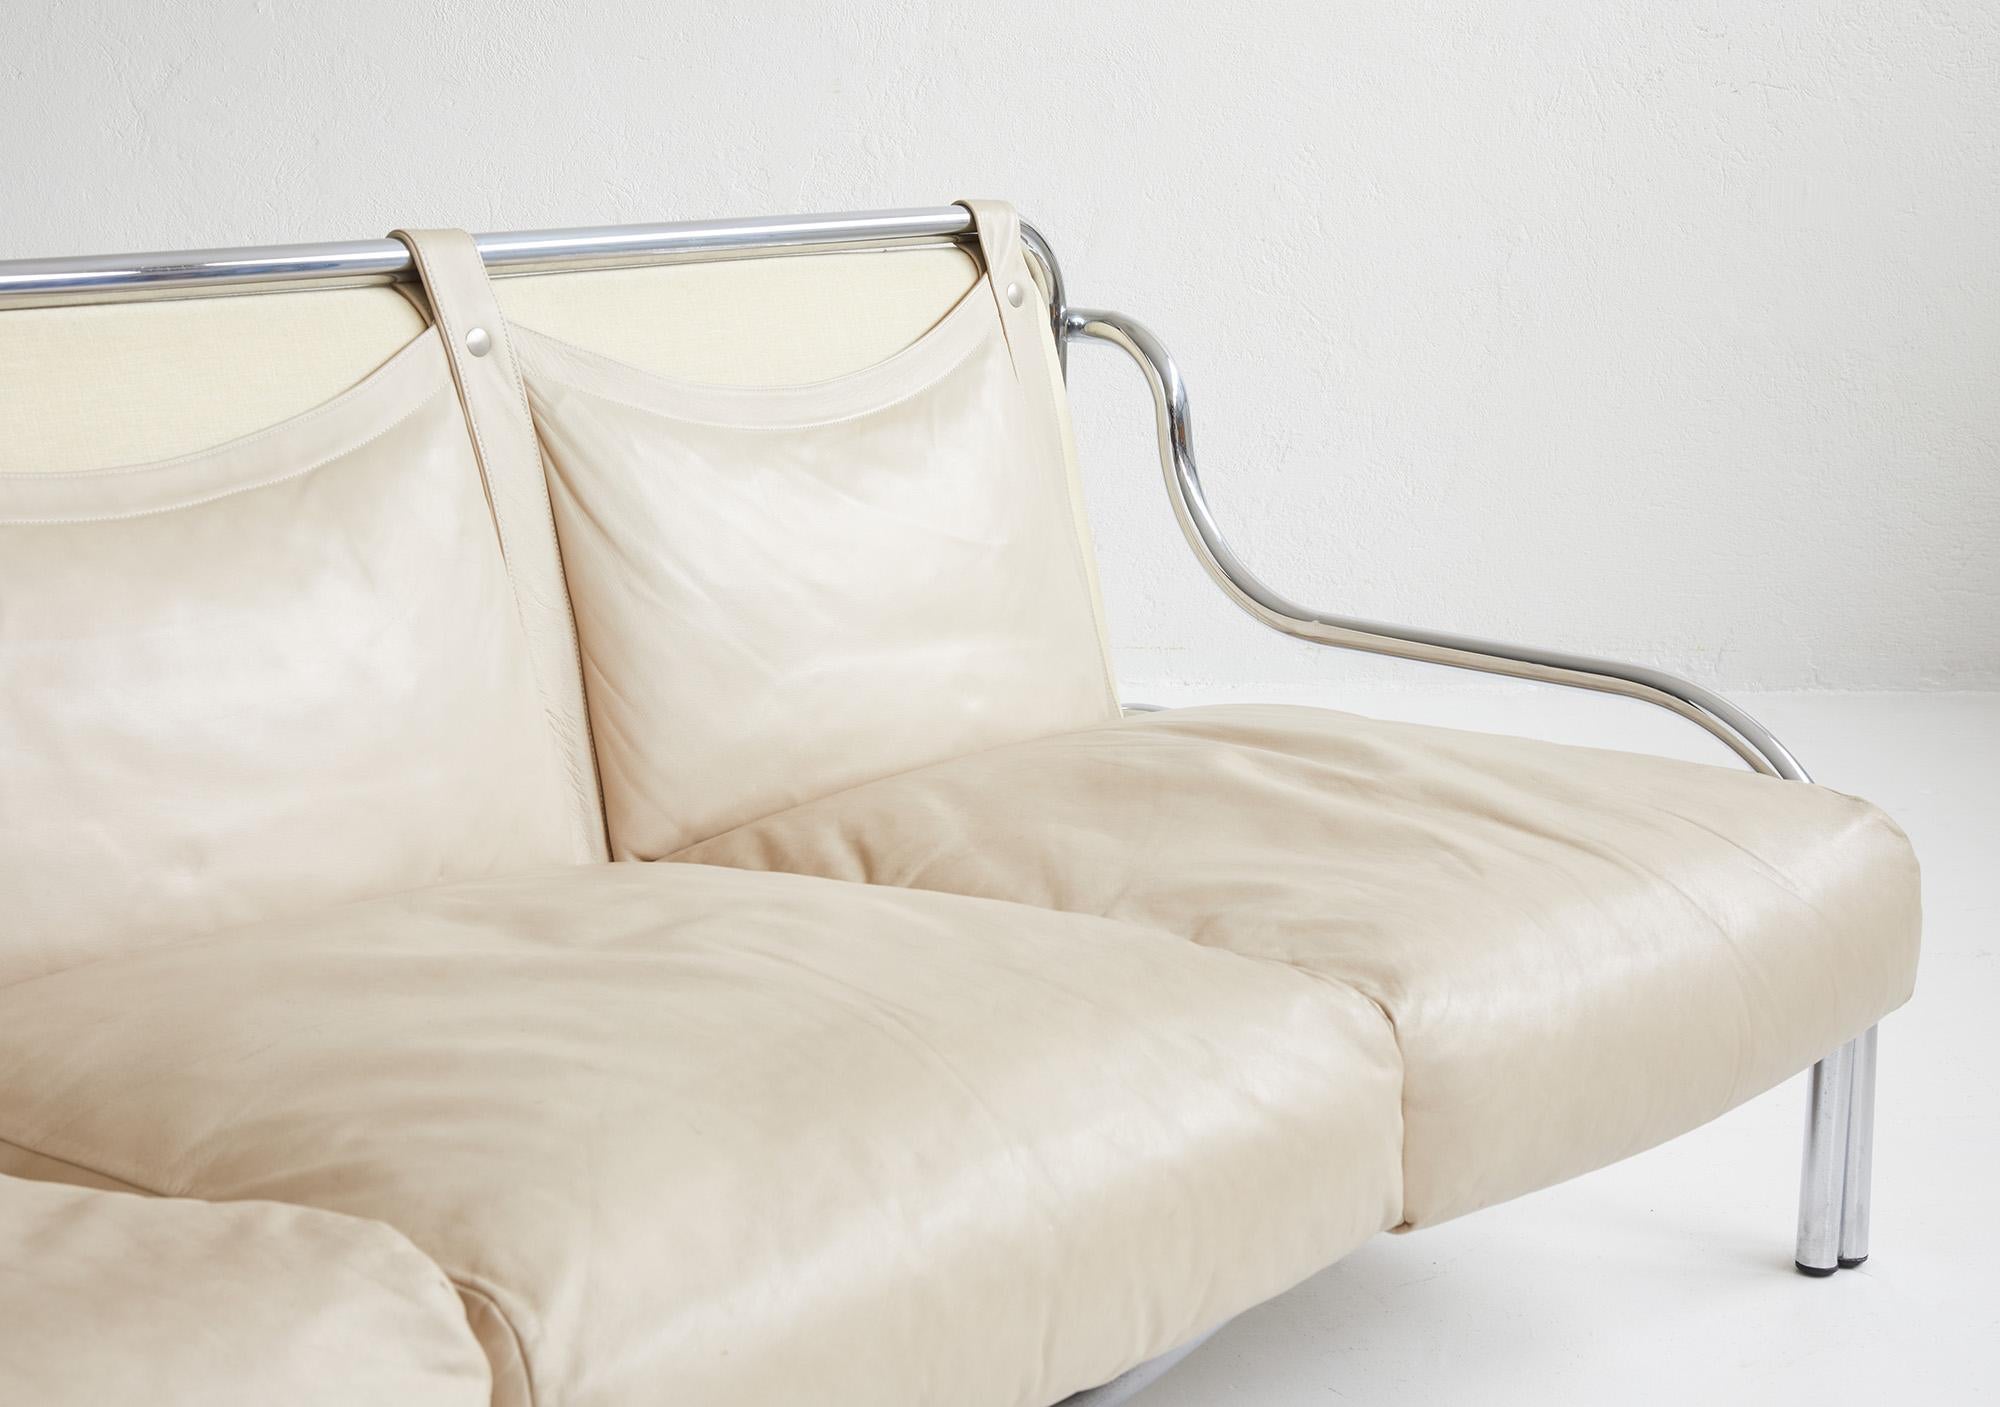 Dreisitziges Leders Sofa „Stringa“ von Gae Aulenti für Poltronova, Italien 1962 im Angebot 2